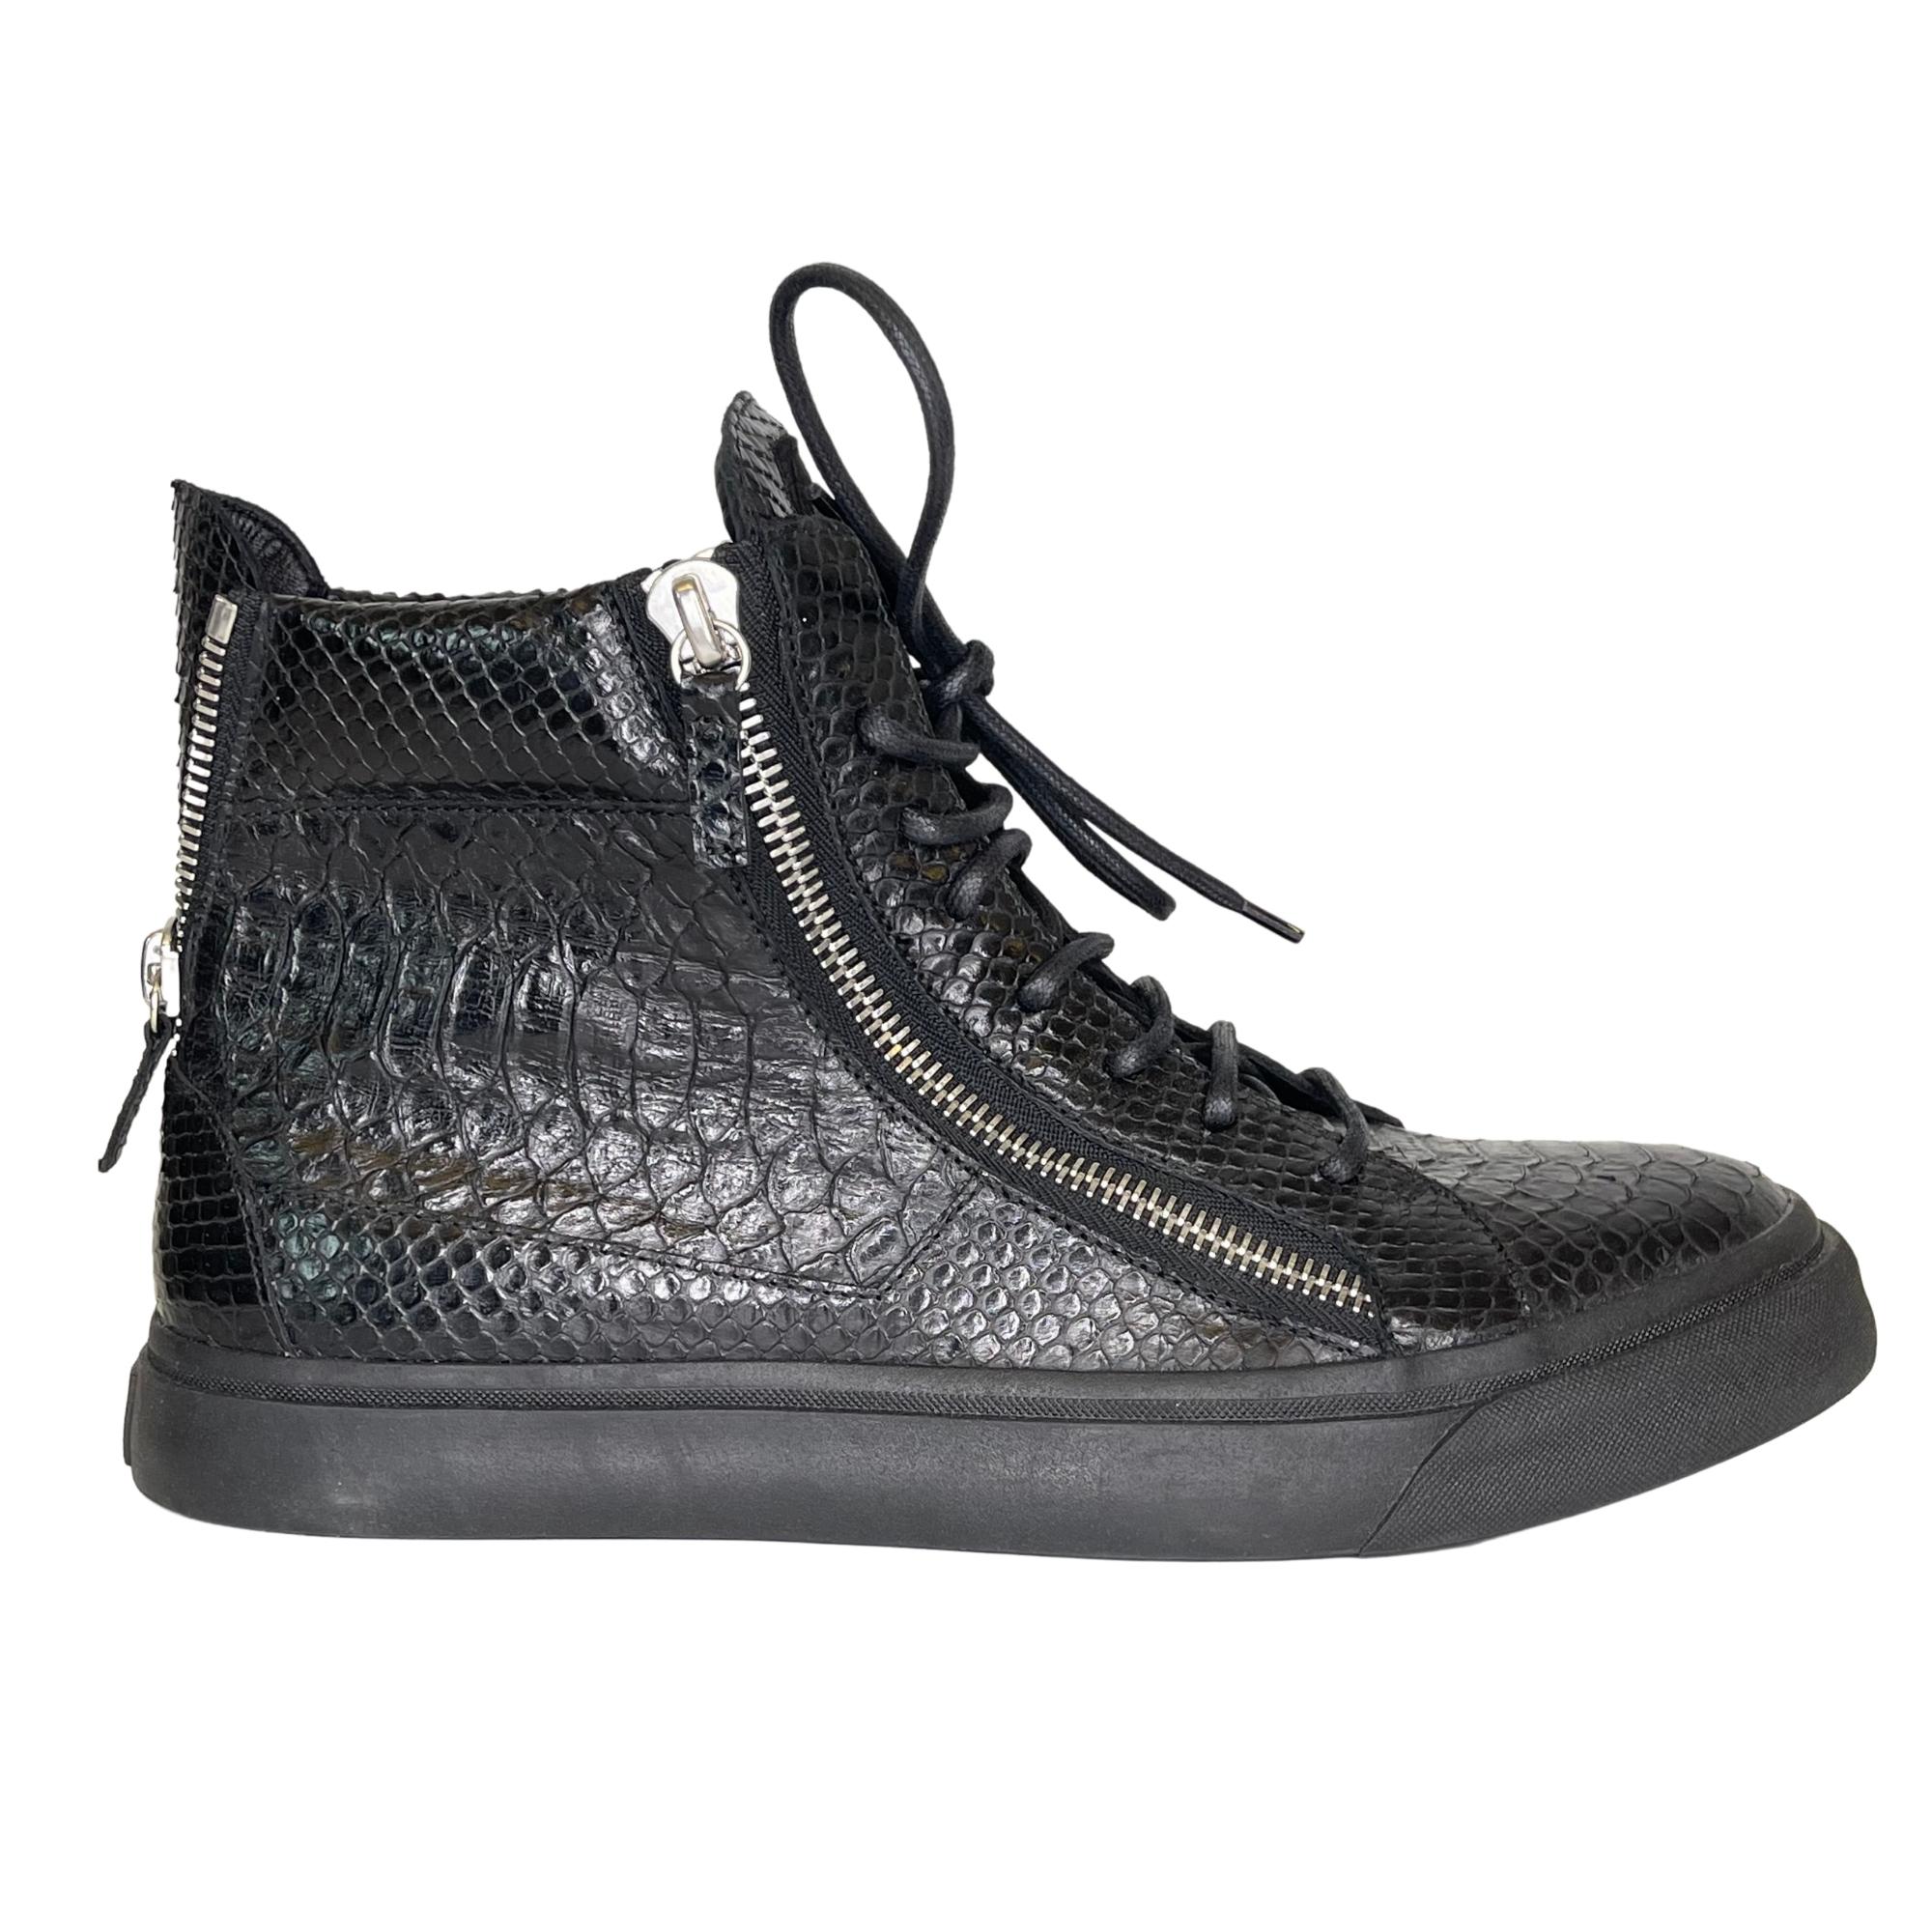 Giuseppe Zanotti Black Croc London High Top Autographed Sneakers (43.5 EU)